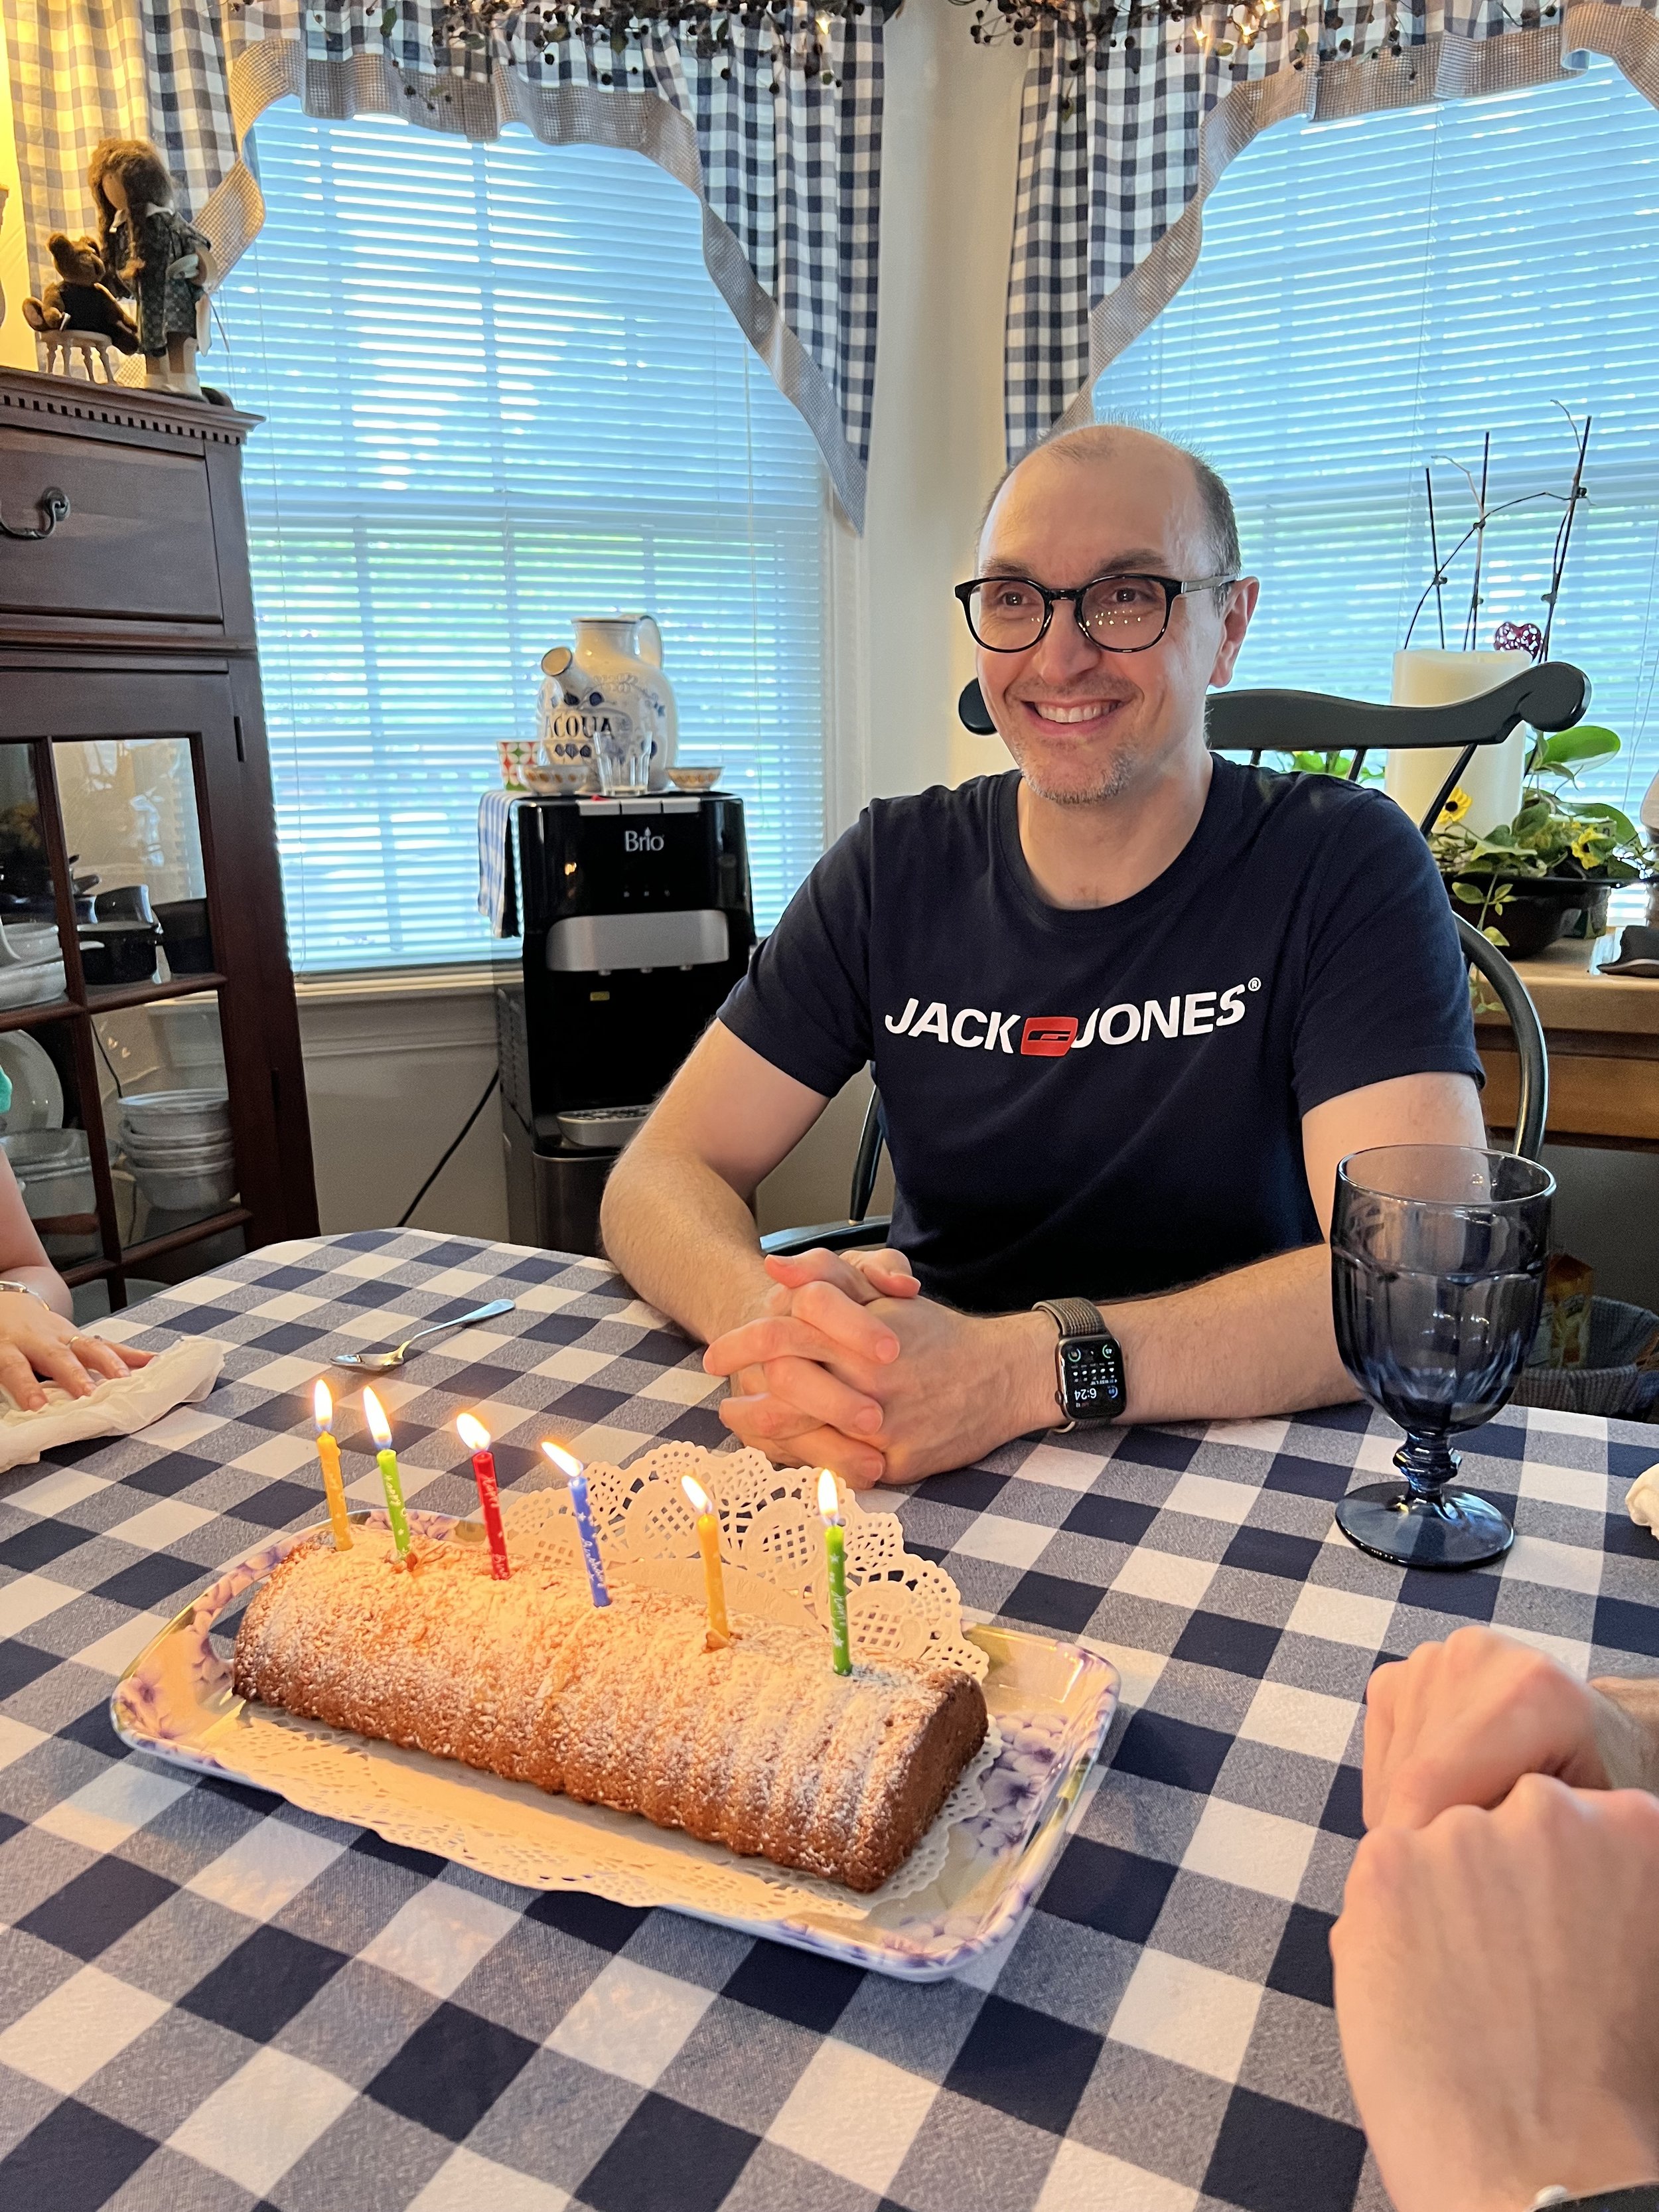 We celebrated Stephen's birthday while in VA